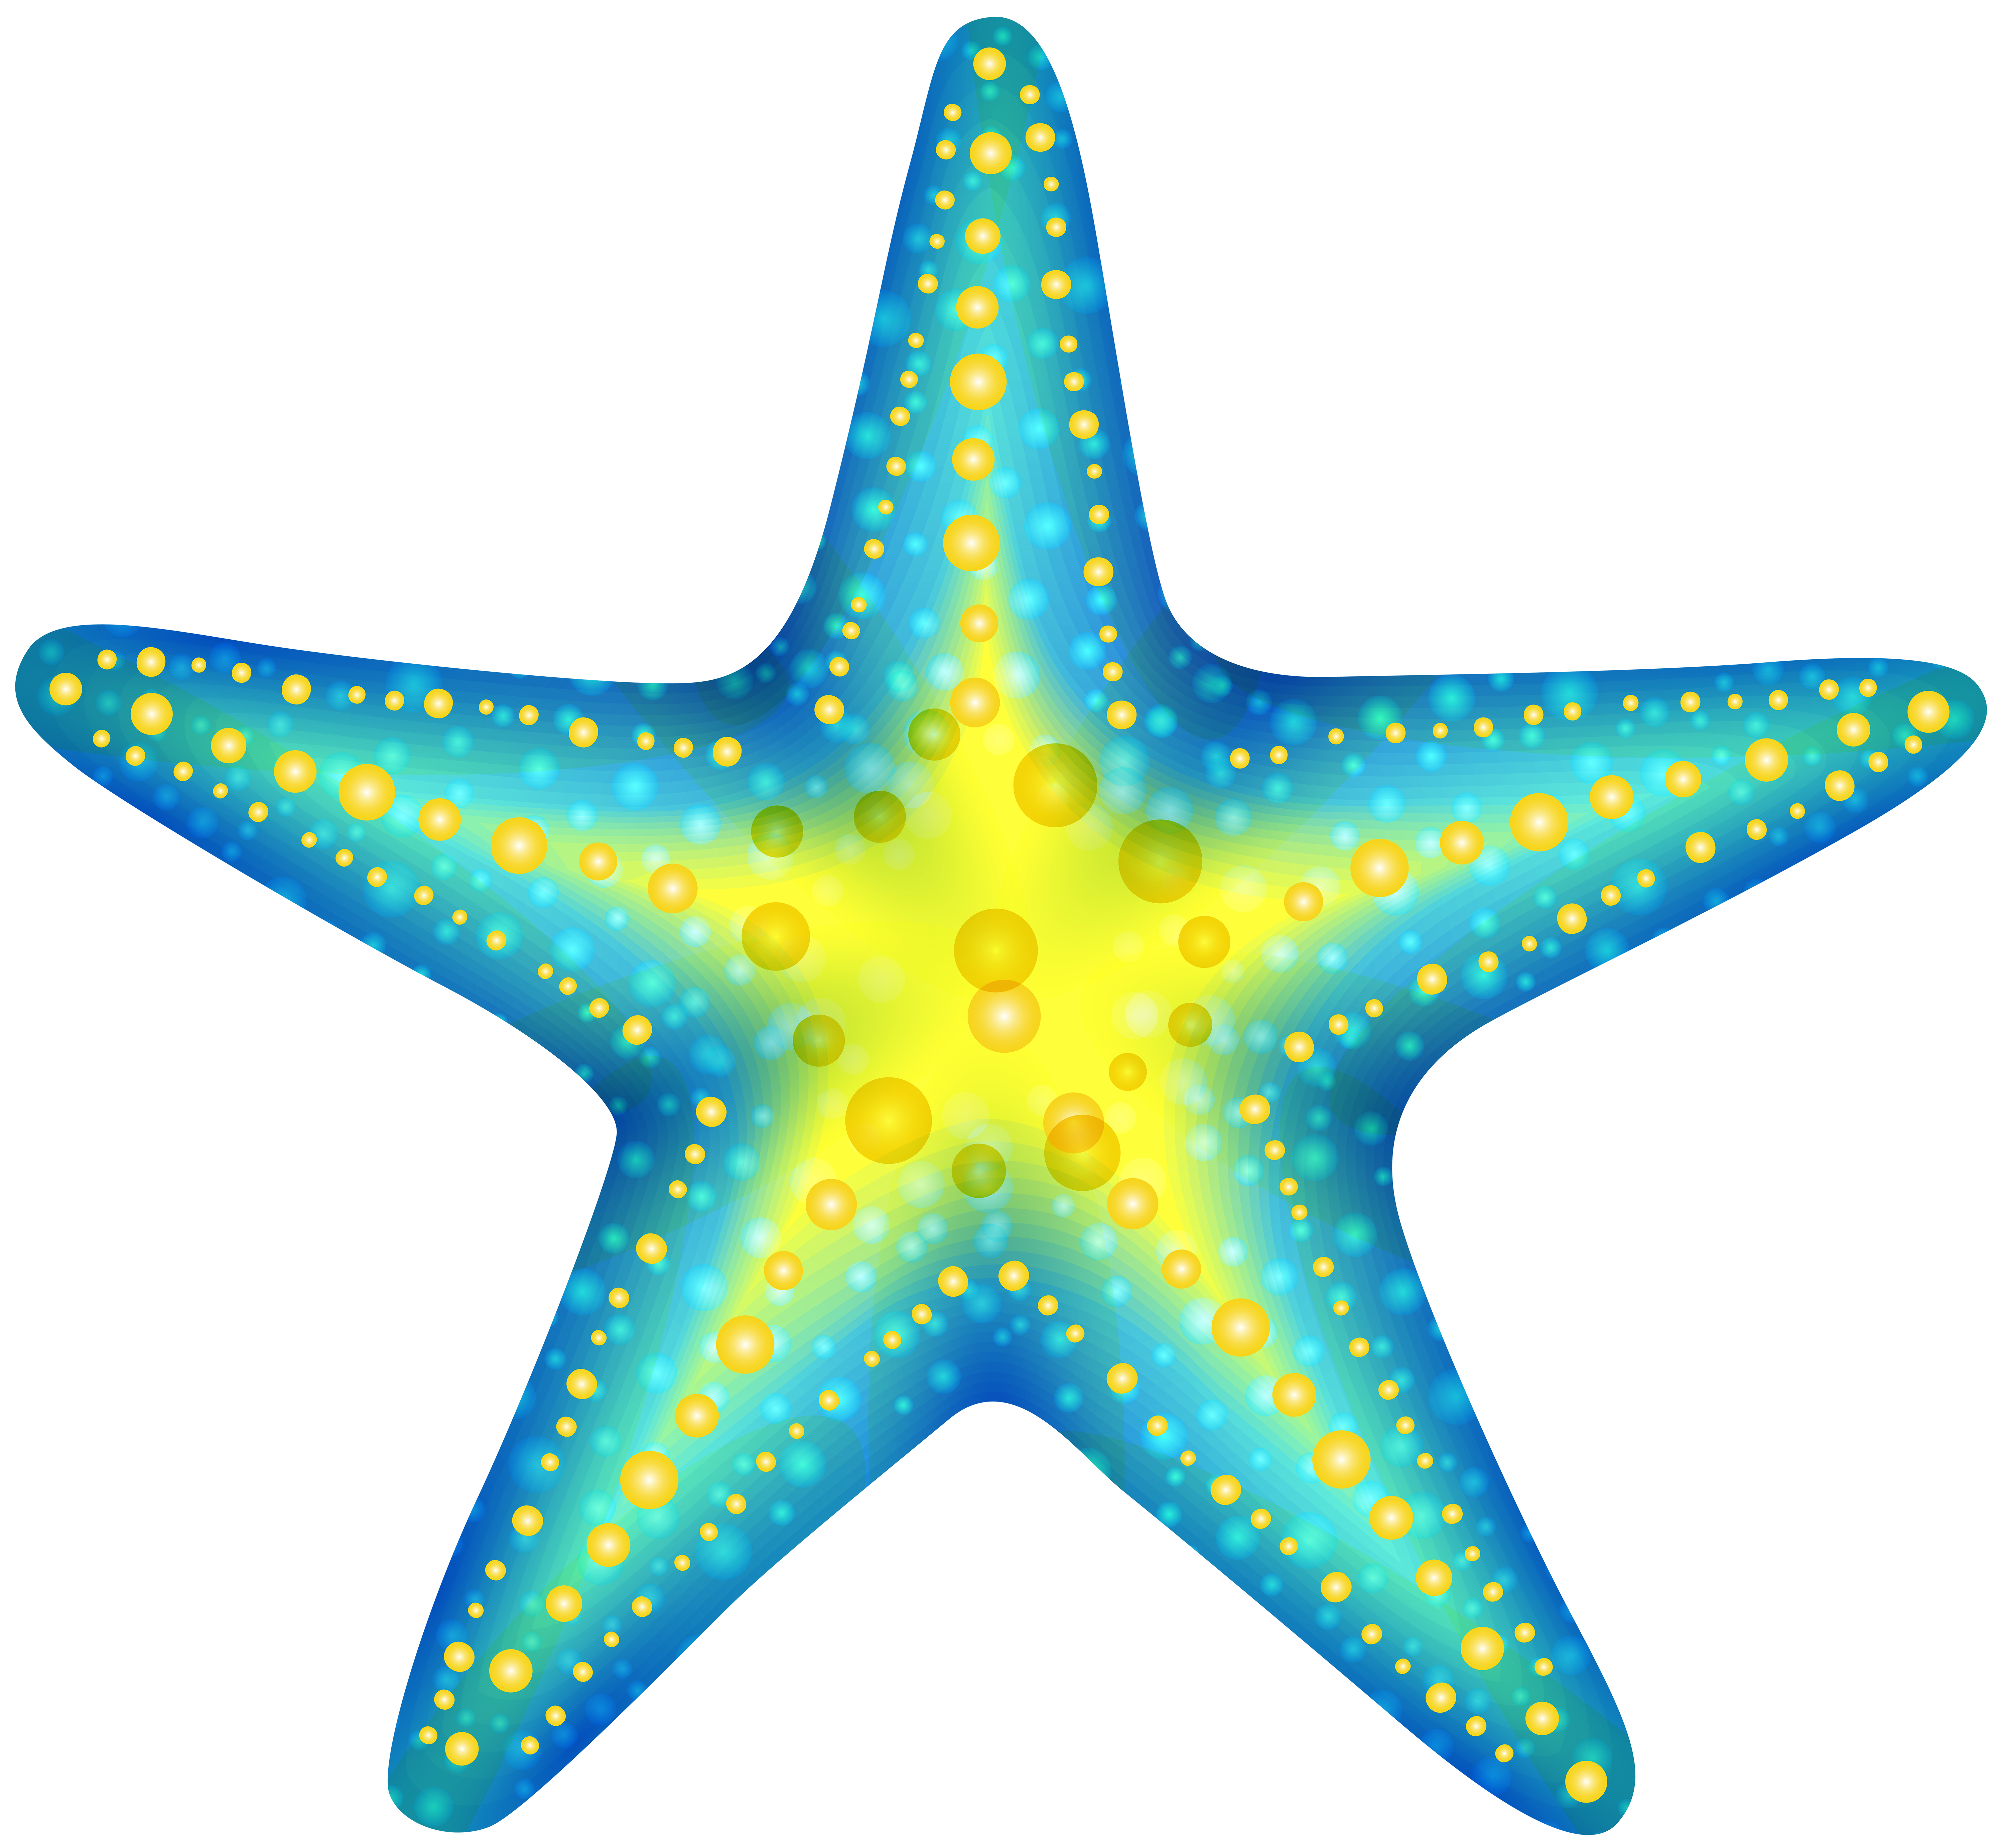 Starfish Clipart – Gclipart.com